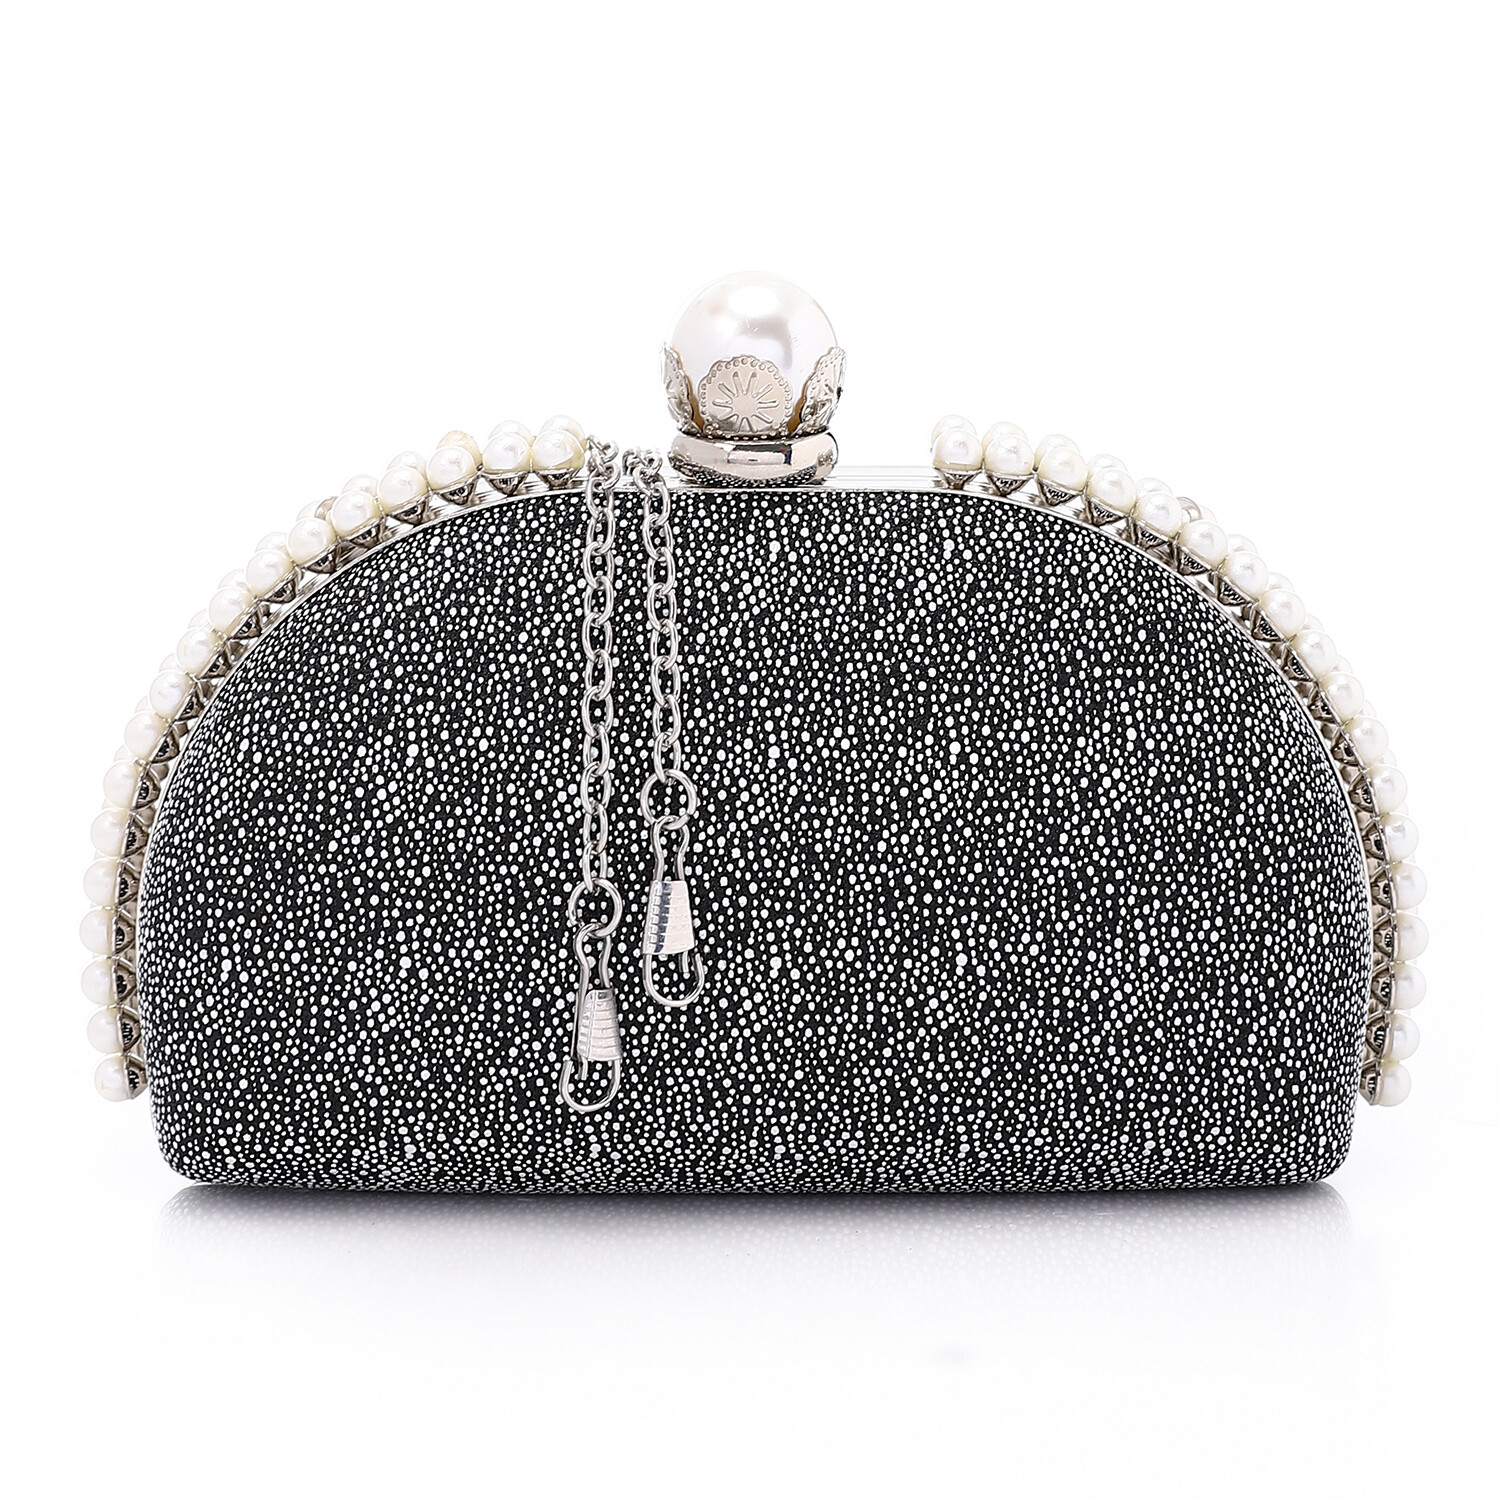 Prominent Pattern Decorative Pearls Glittery Clutch - Black 4987